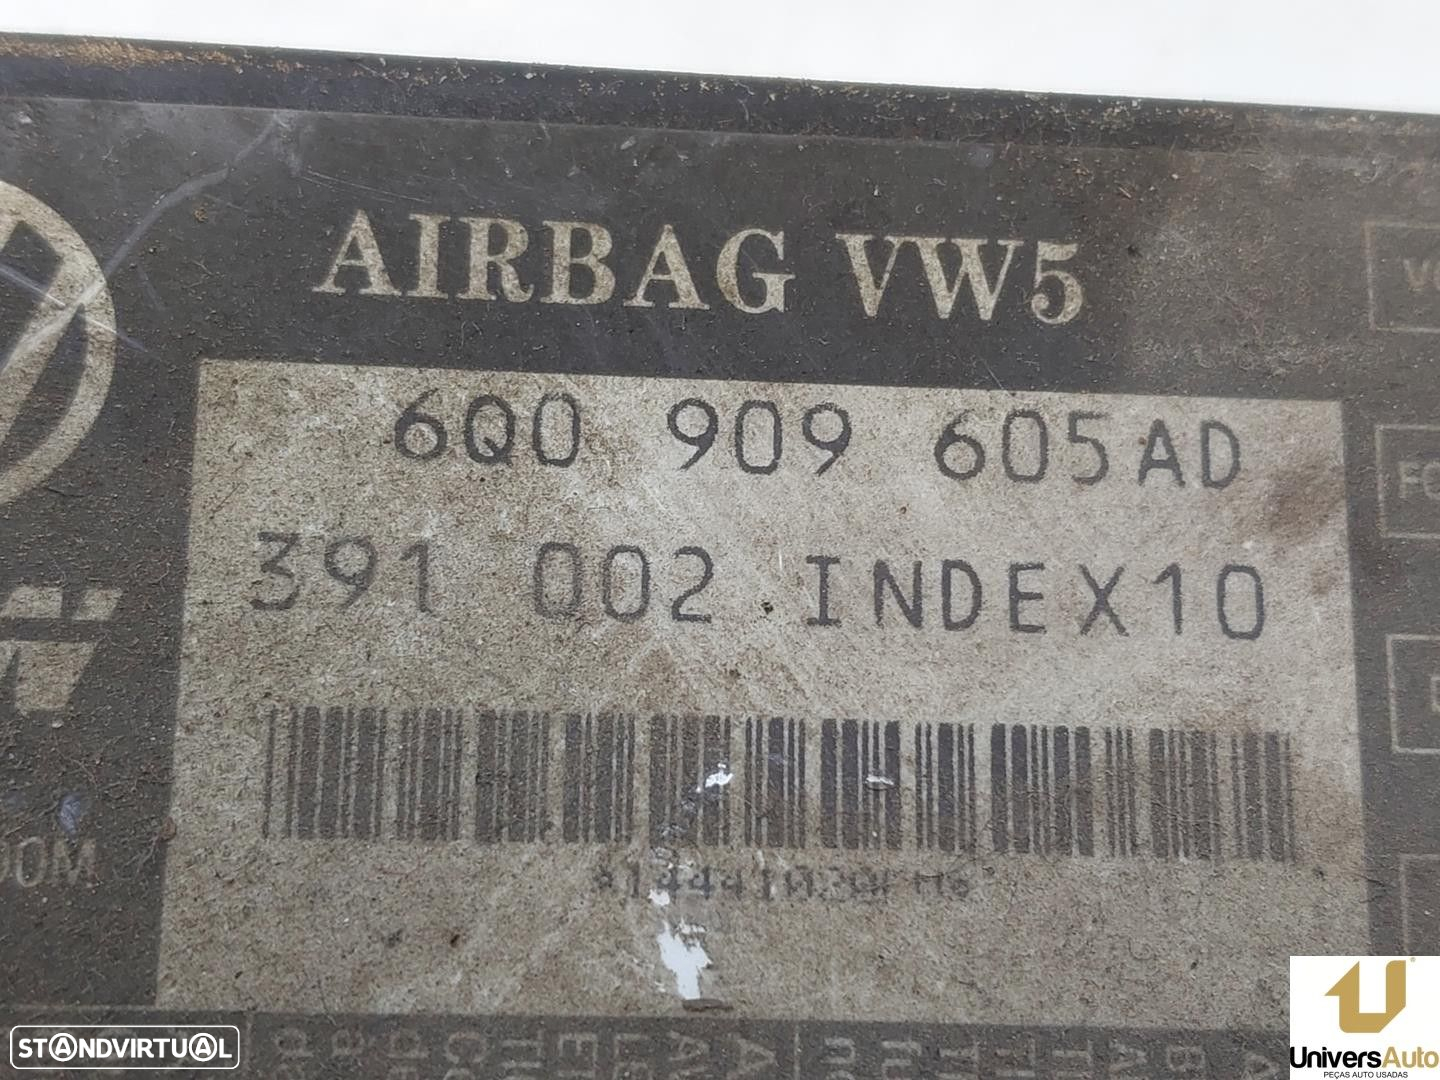 CENTRALINA AIRBAG SEAT IBIZA III 2002 -6Q0909605AD - 8